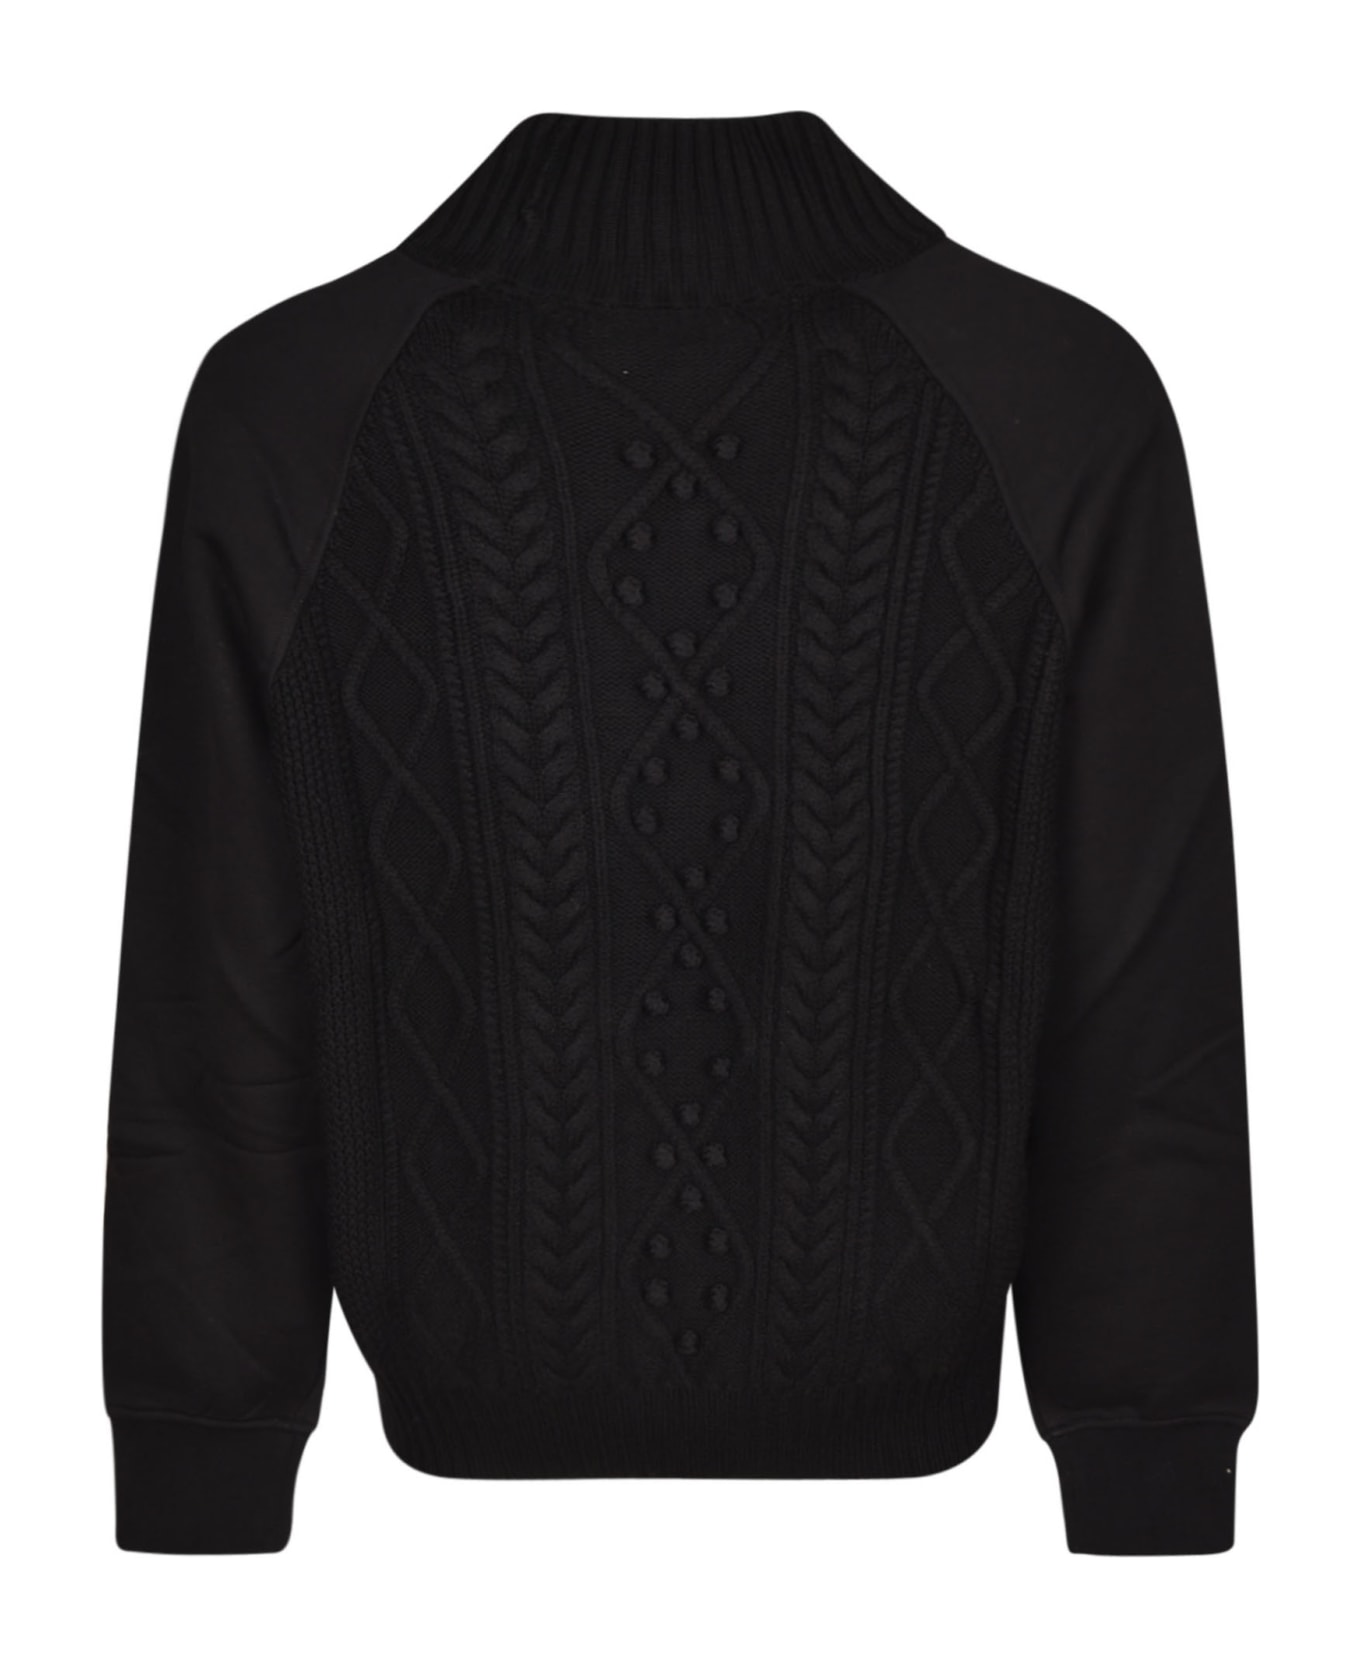 Neil Barrett Hybrid Cable Knit High Neck Sweater - Black